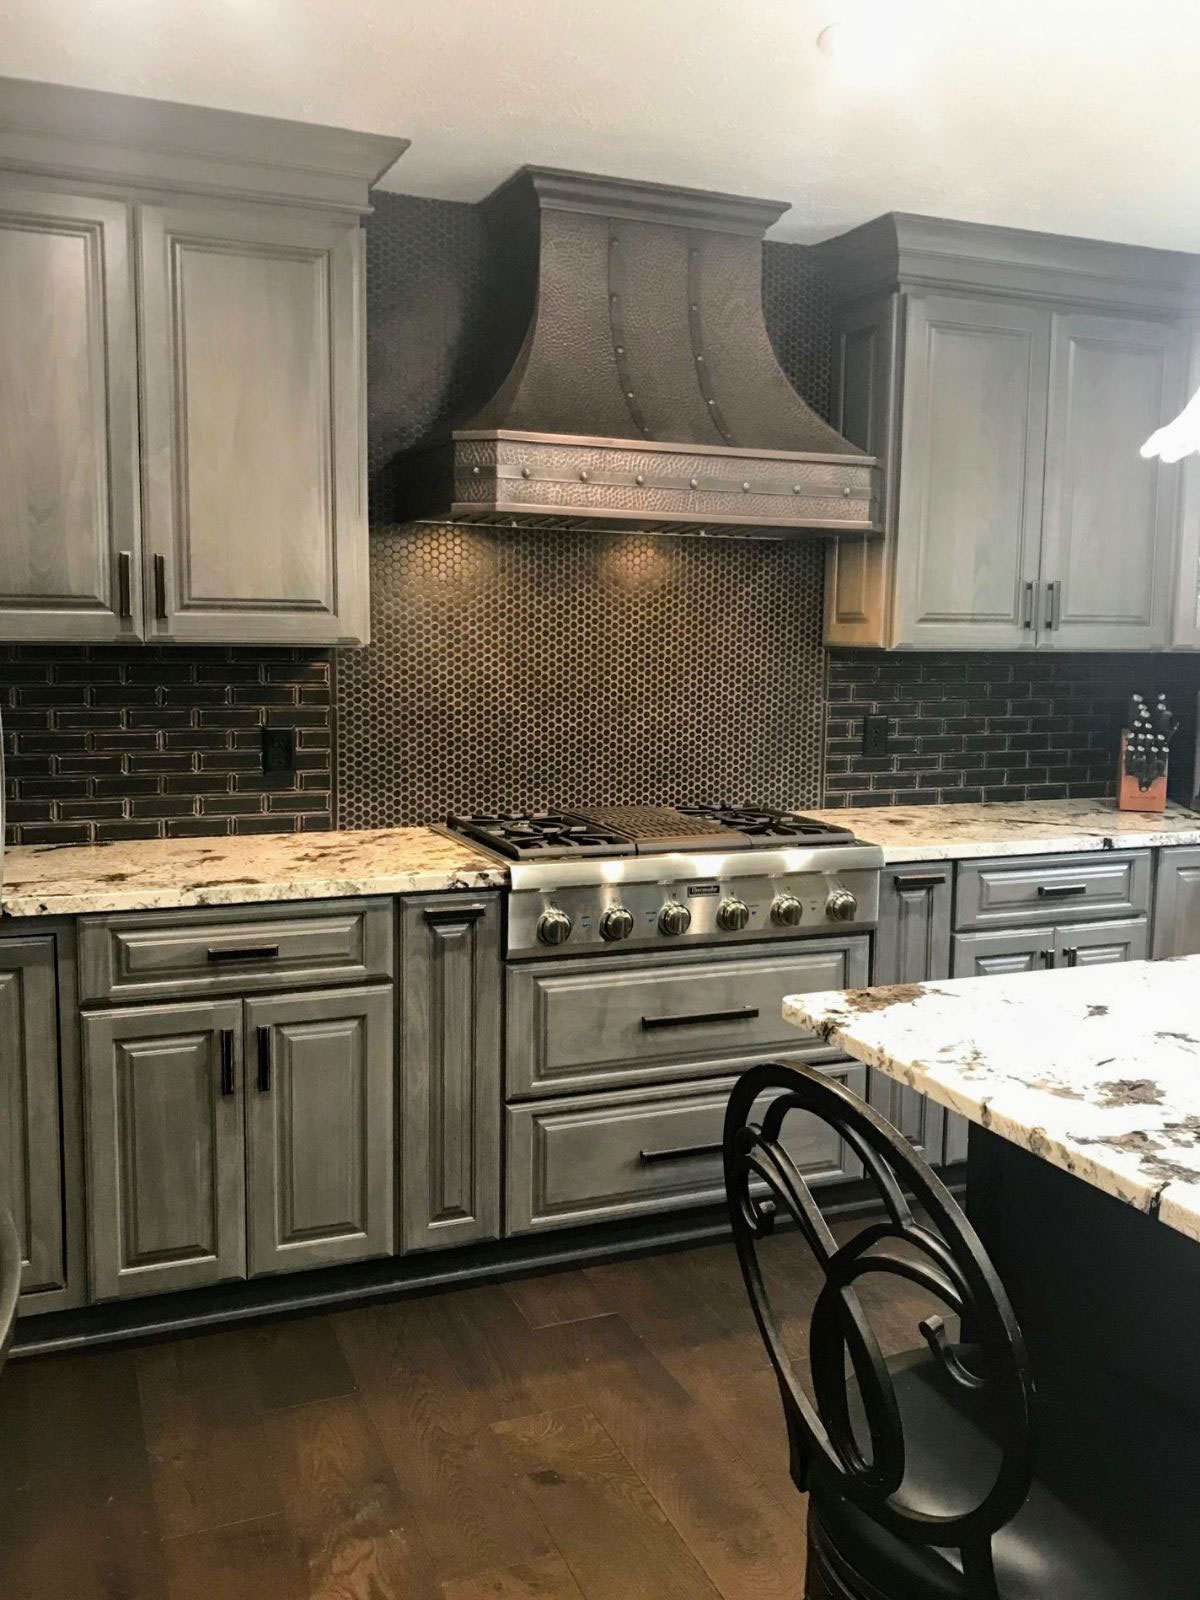 French kitchen design with grey cabinets,marble countertops, captivating brick backsplash, while exploring range hood